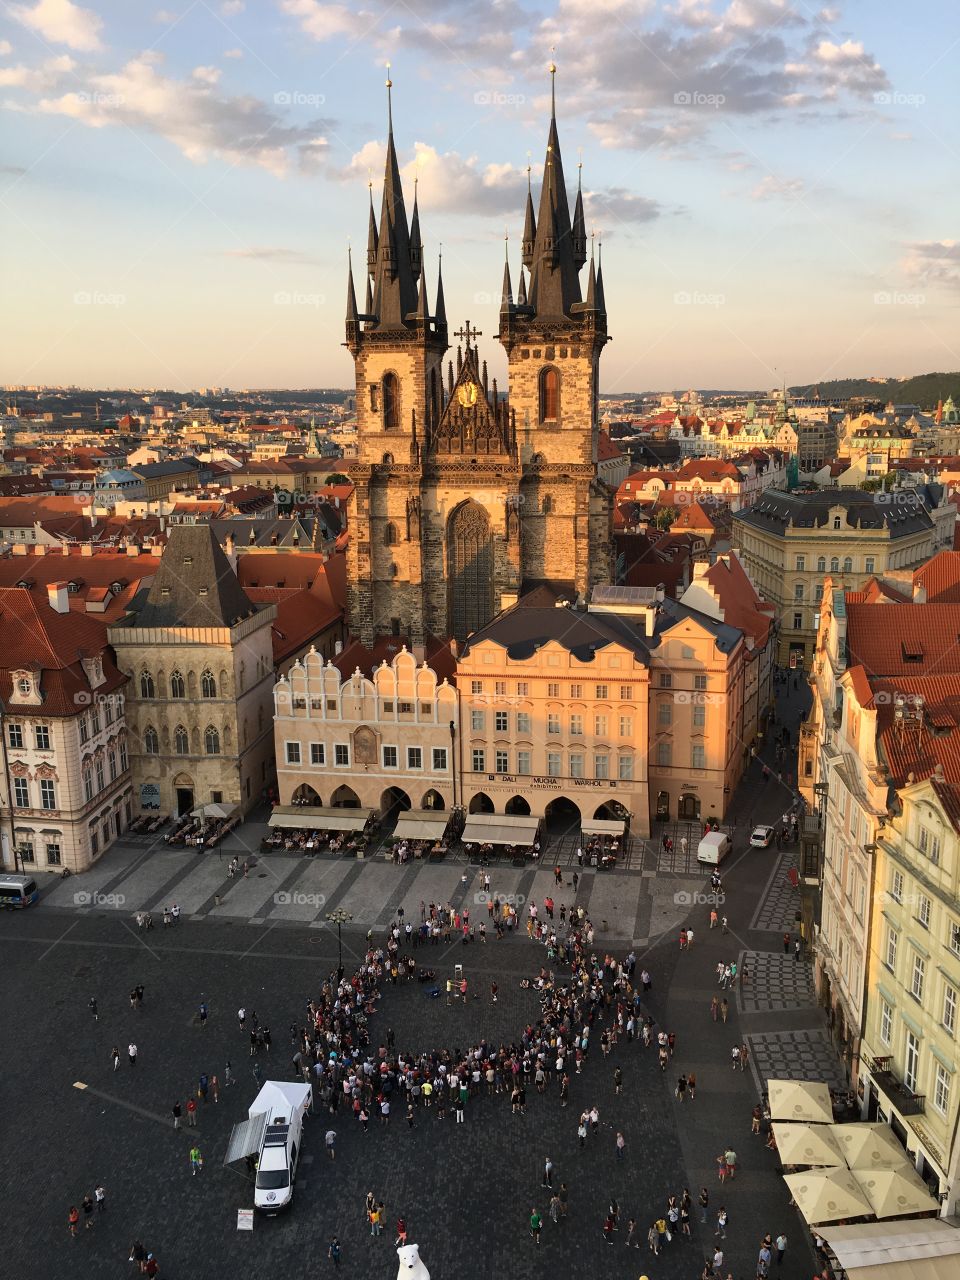 Prague in 2019